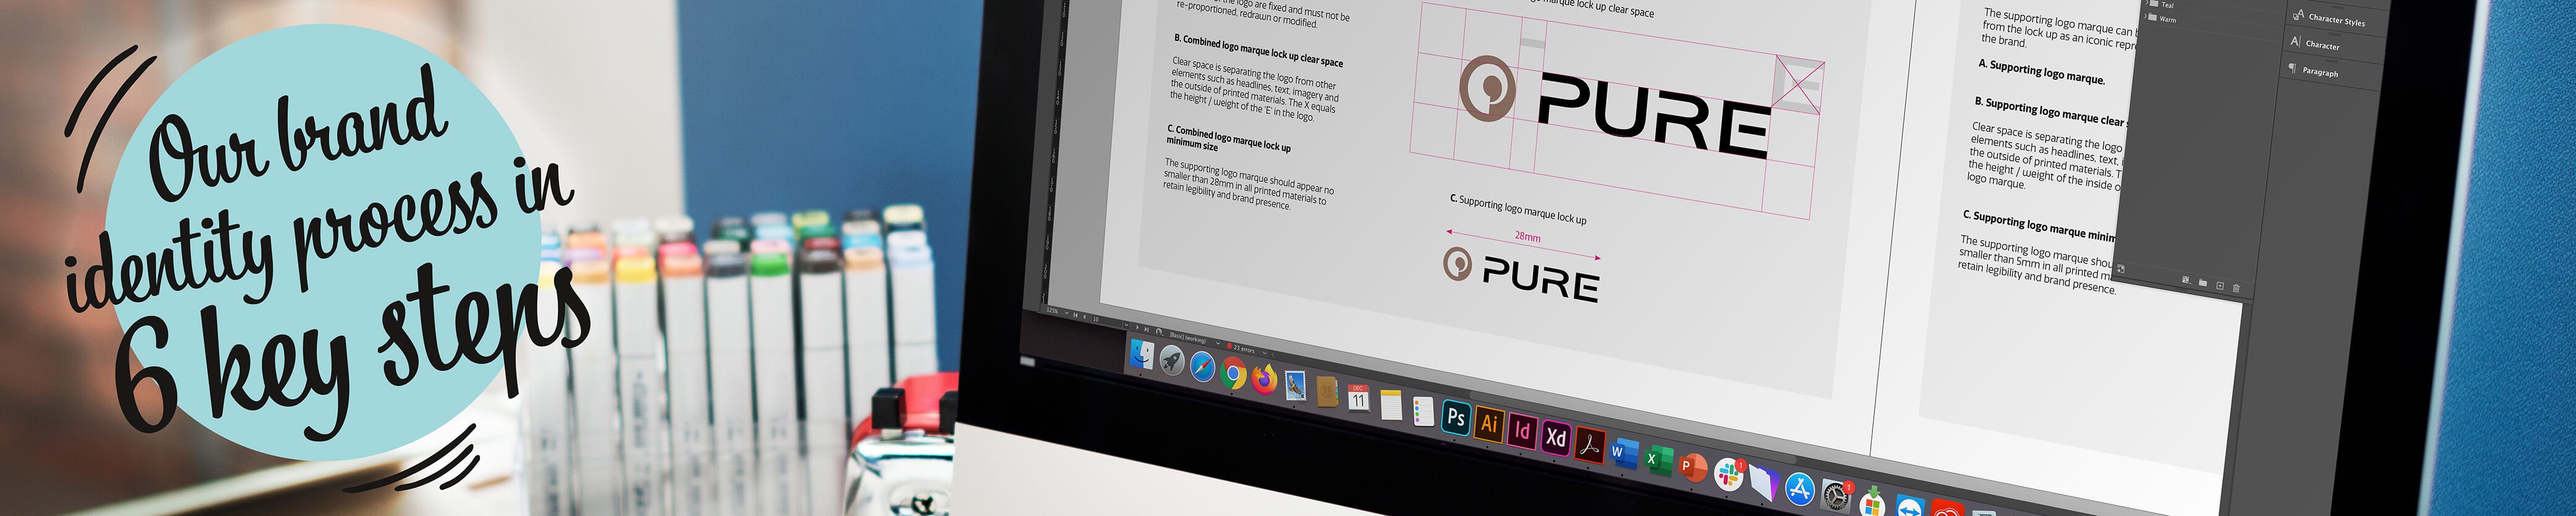 Fluro brand identity process - Pure digital logo on iMac